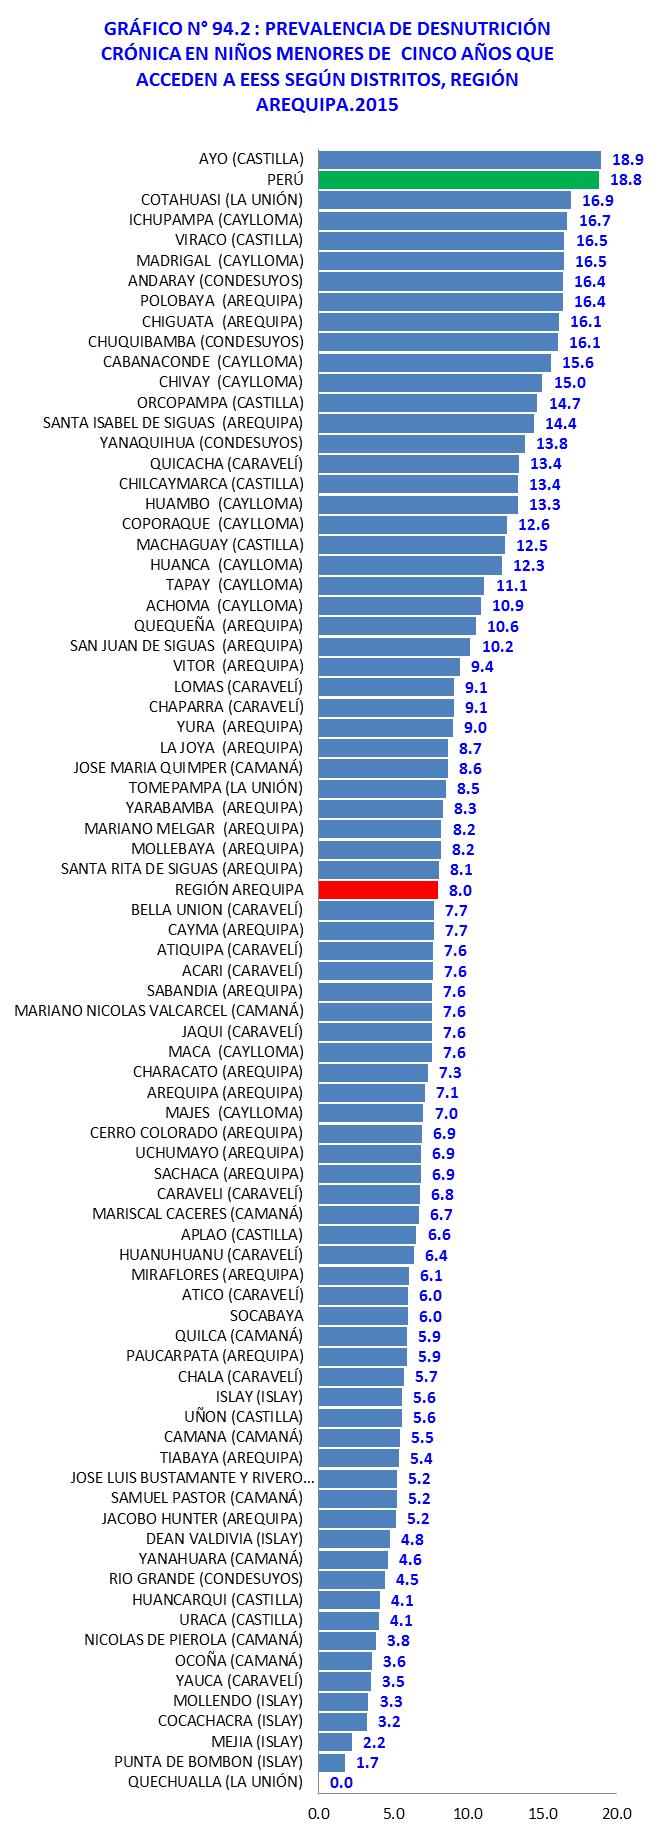 Gobierno Regional de Arequipa LEYENDA MUY ALTA PREVALENCIA > 40% ALTA PREVALENCIA 30 a 39.9% MODERADA PREVALENCIA 20 a 29.